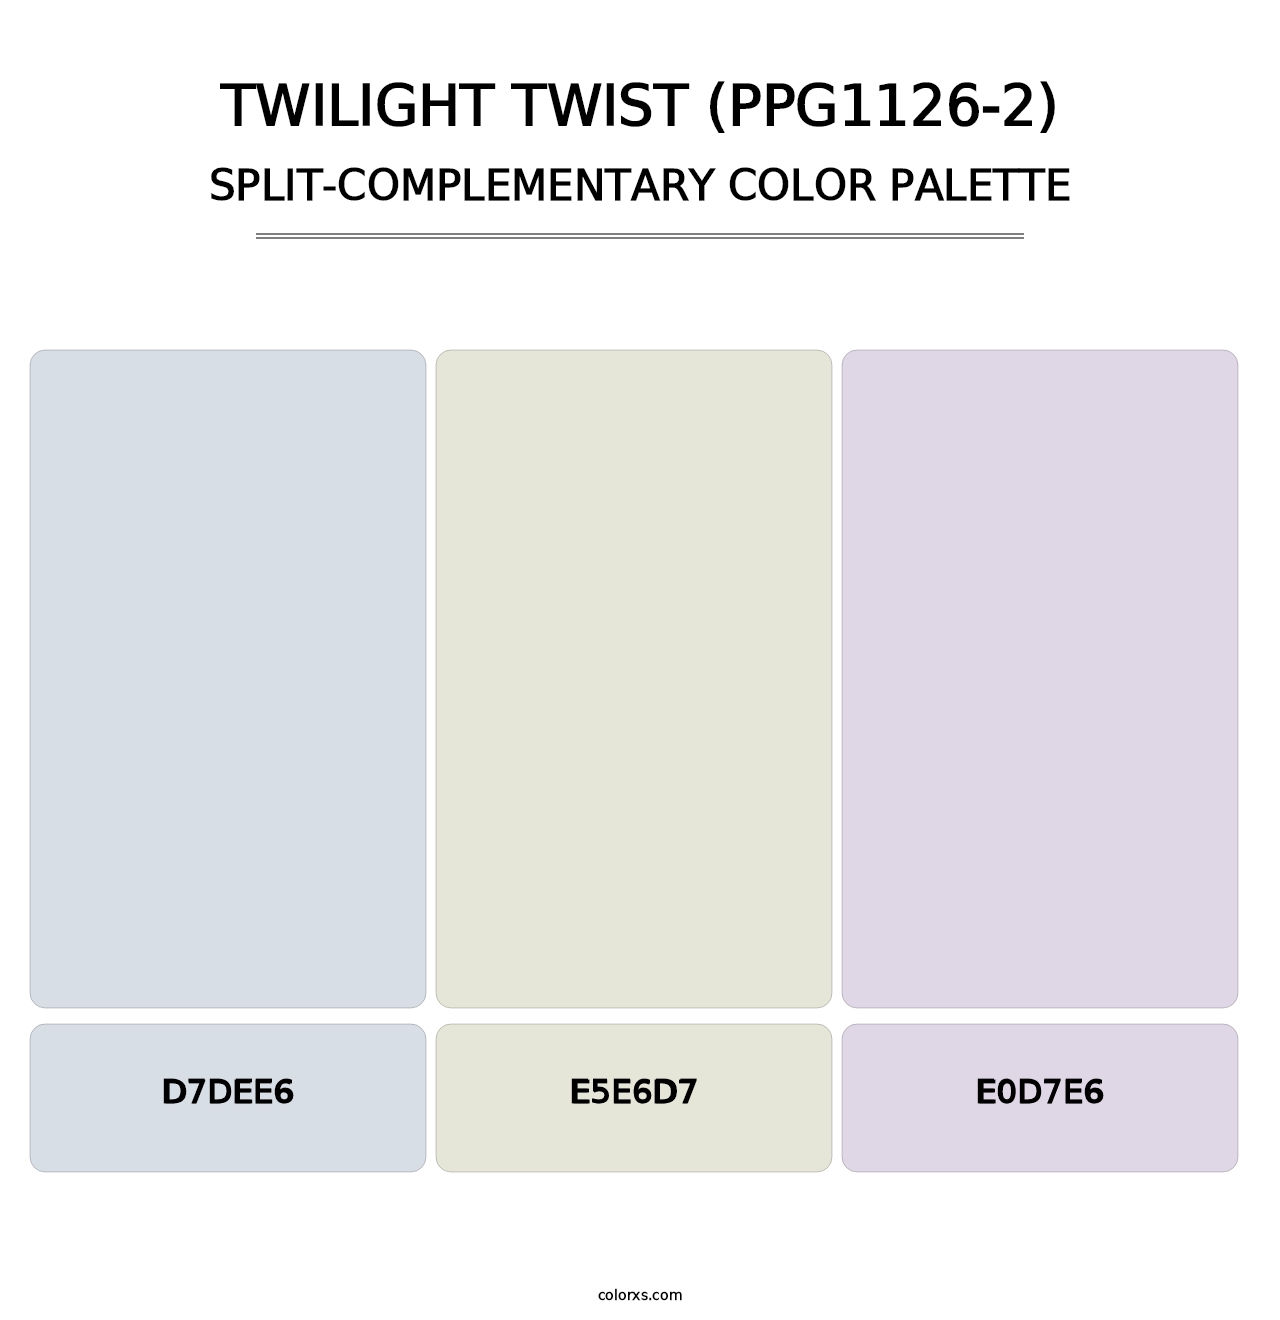 Twilight Twist (PPG1126-2) - Split-Complementary Color Palette